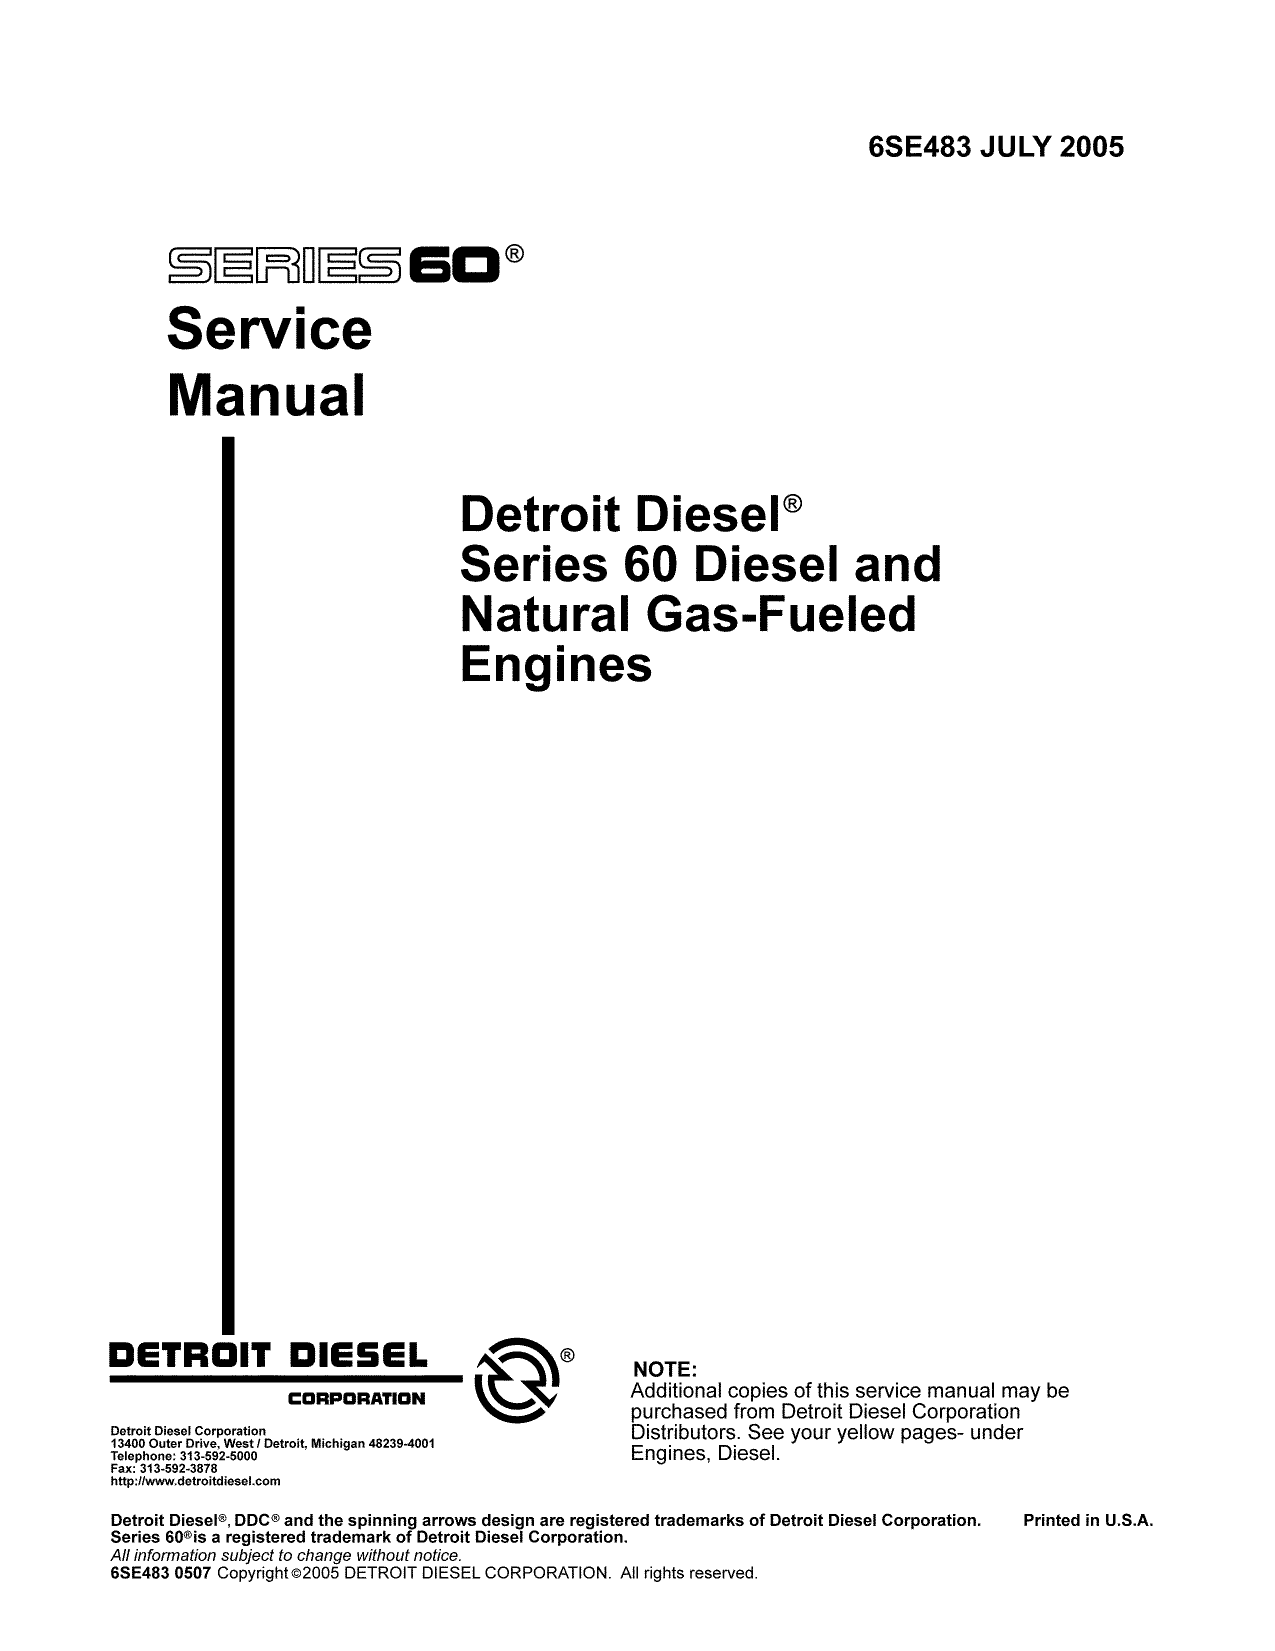 Detroit Diesel 60 series engine manual Preview image 6